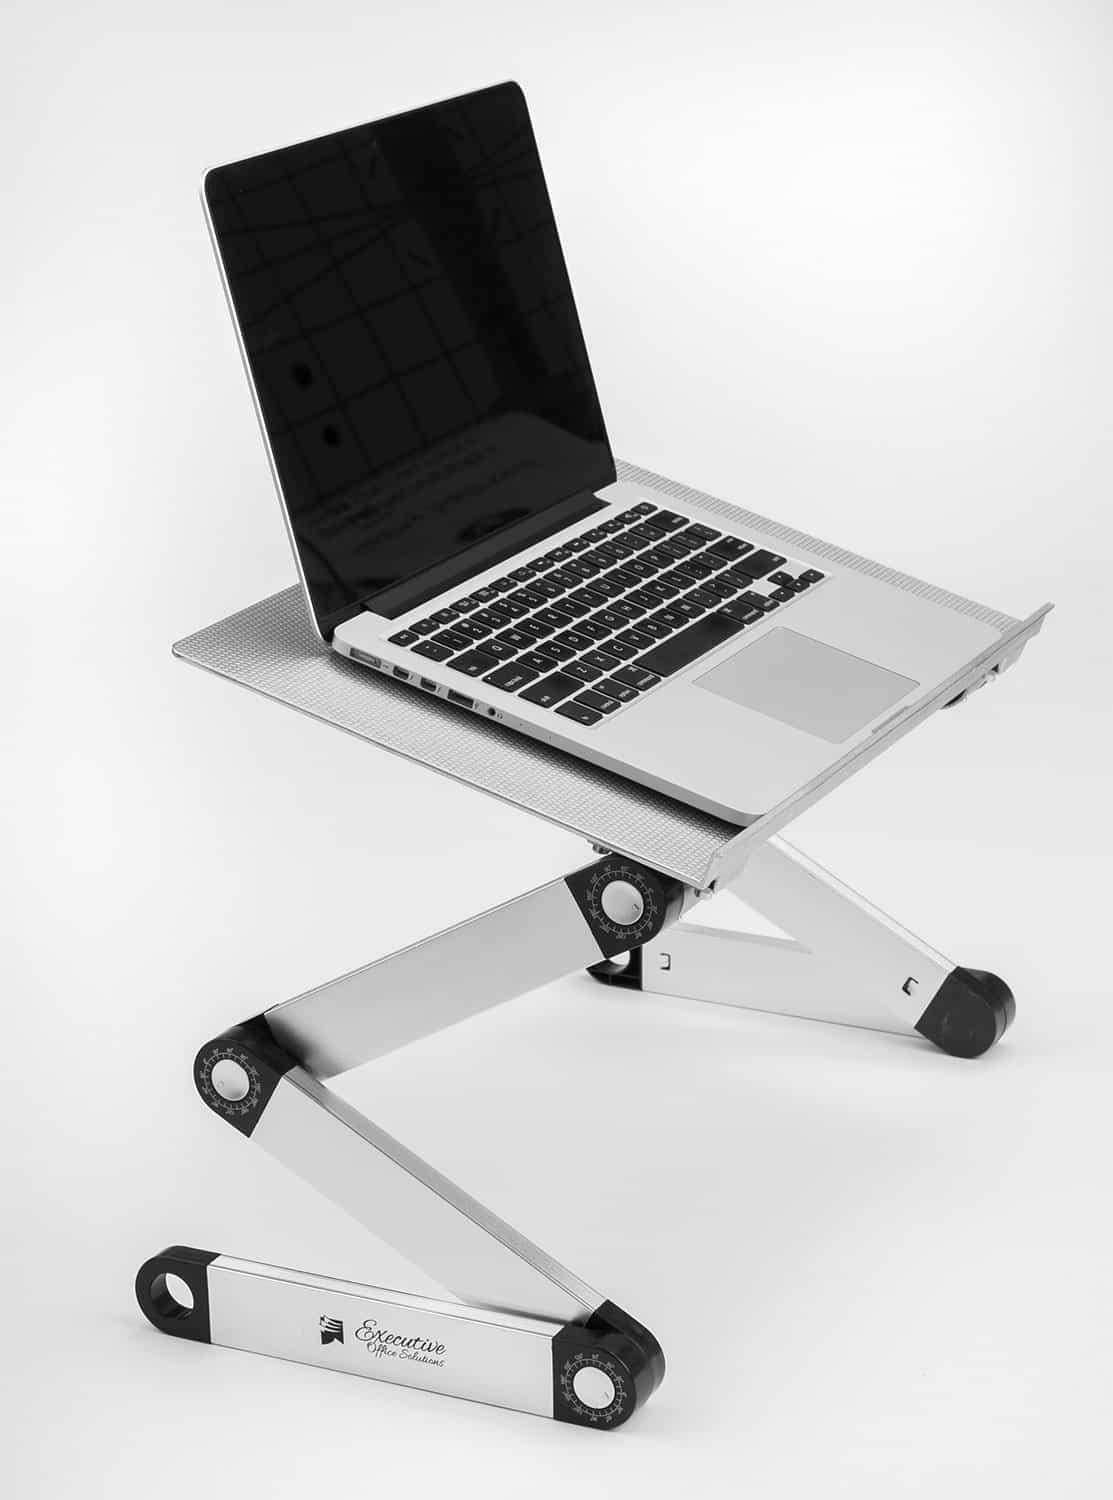 The Whitish Silver Portable Adjustable Aluminum Laptop Desk